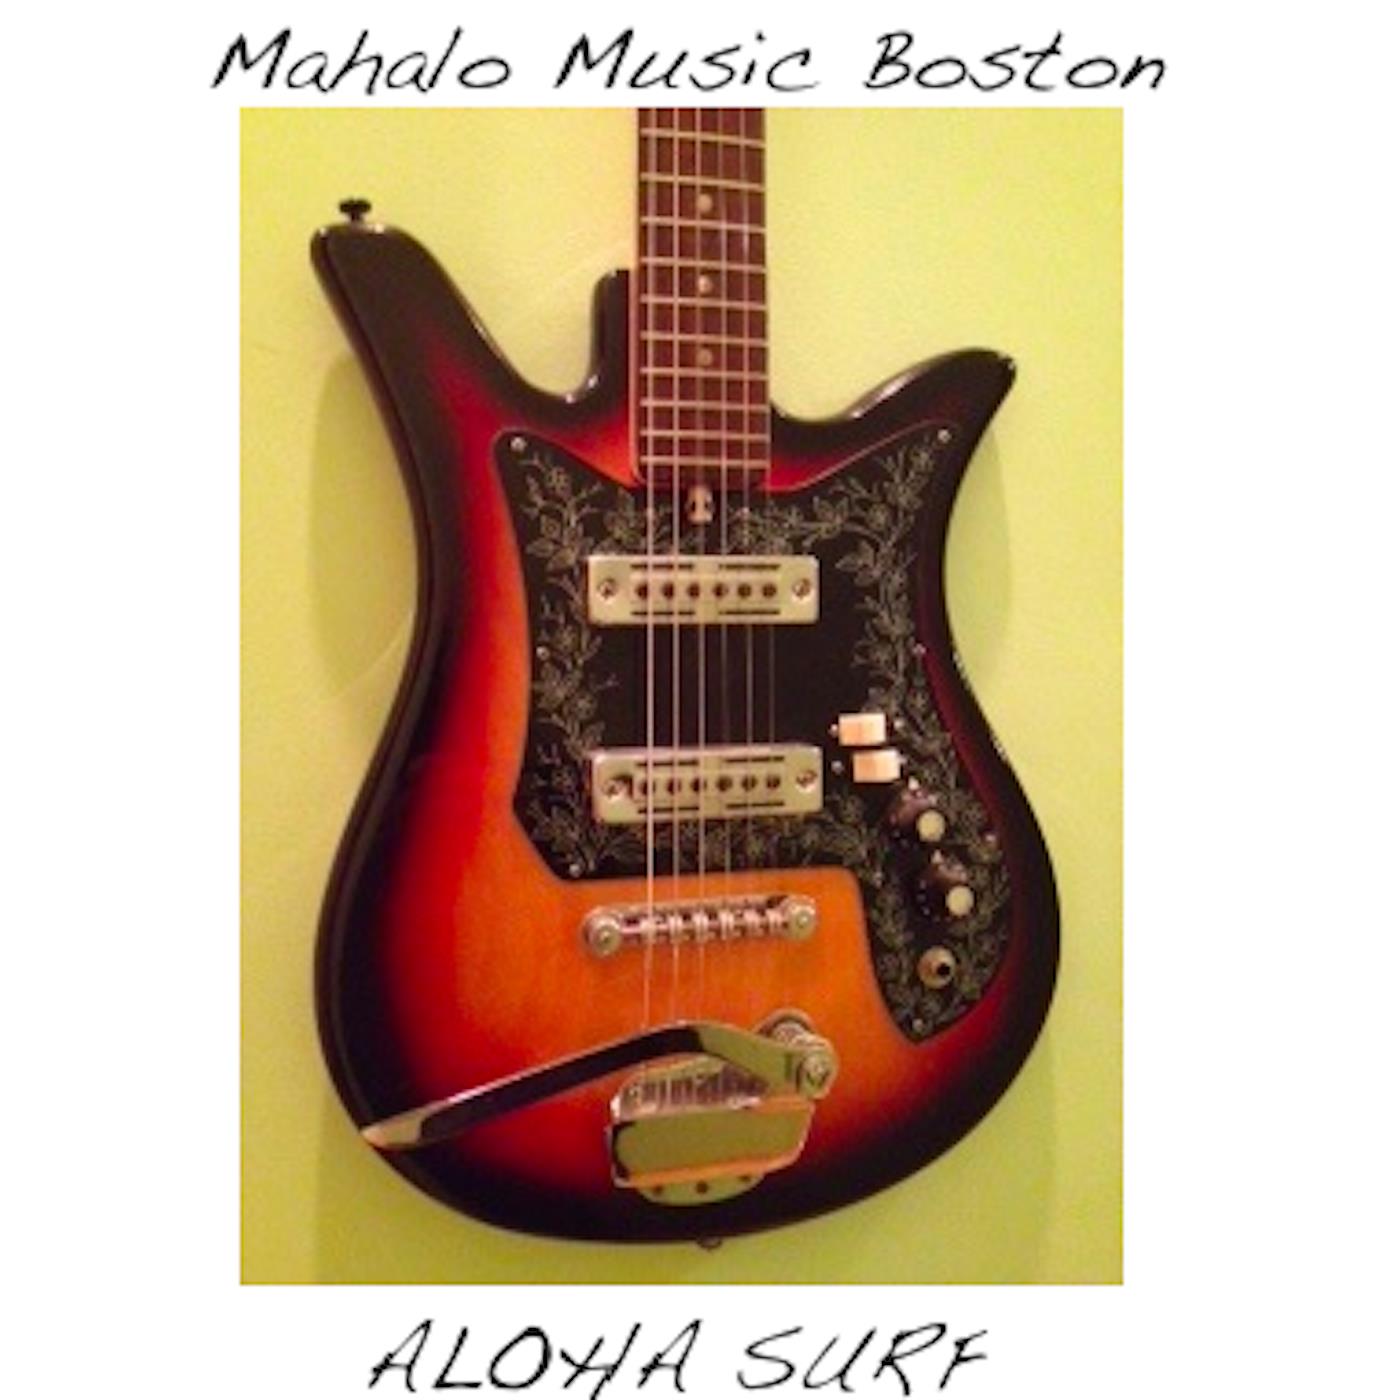 Mahalo Music Boston - Aloha Surf